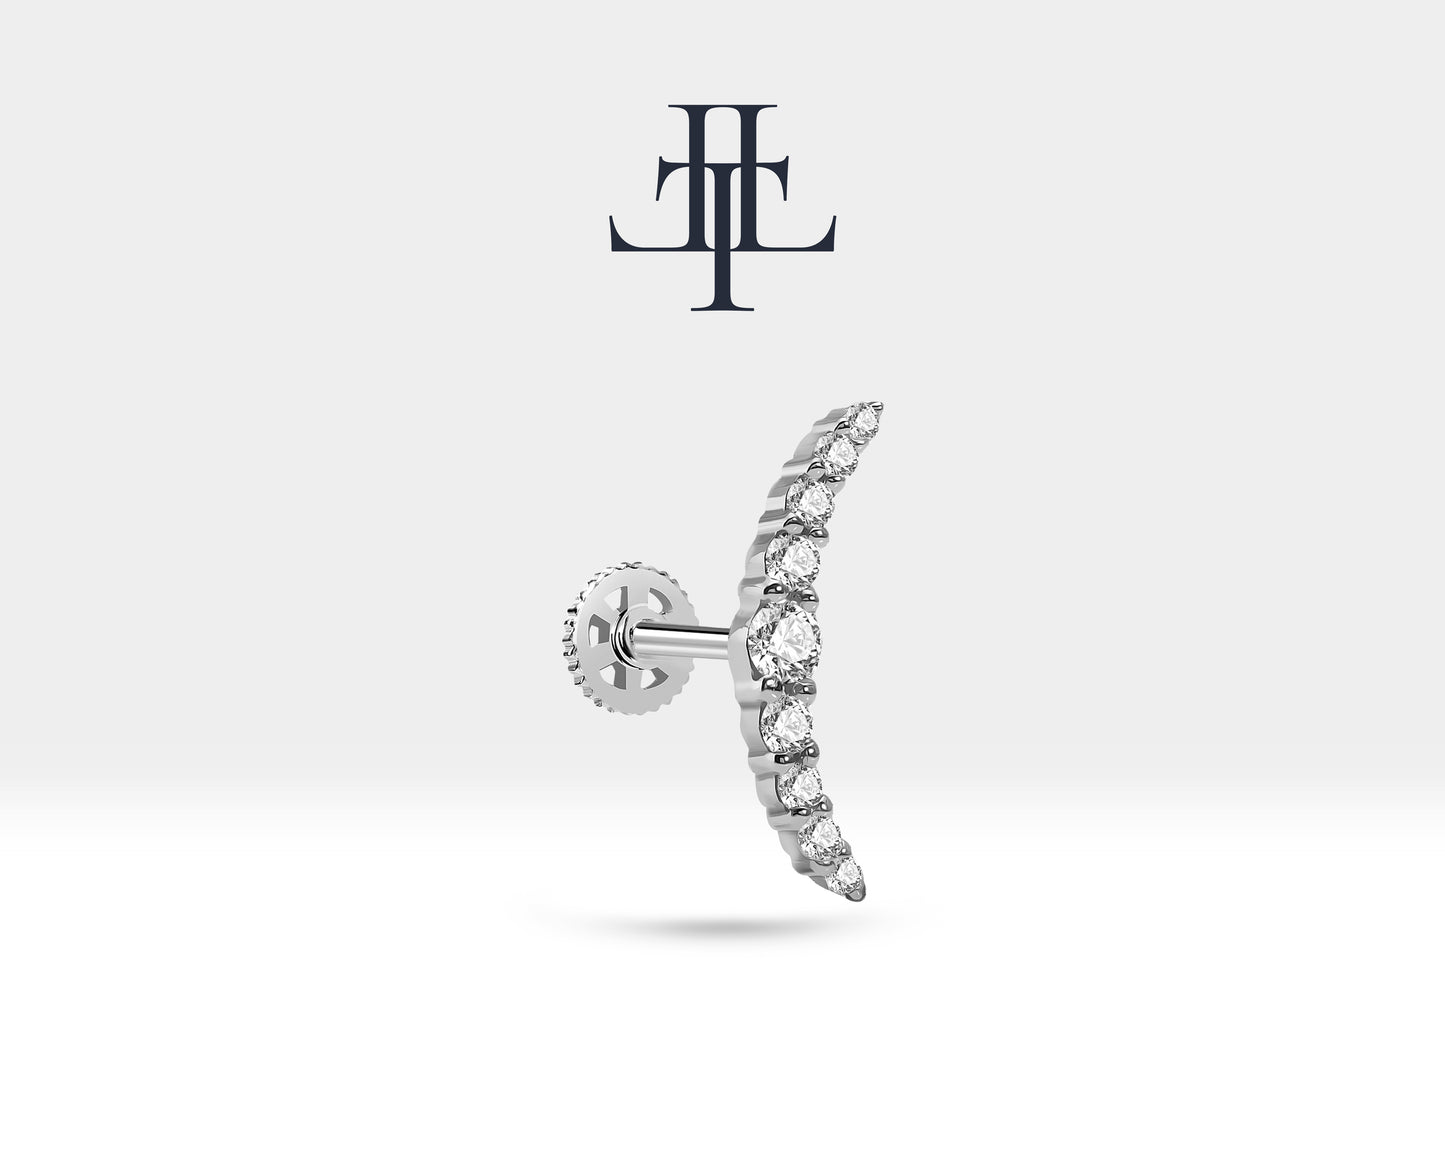 Cartilage Moon Diamond Design Clicker Piercing,Single Helix Stud Earring